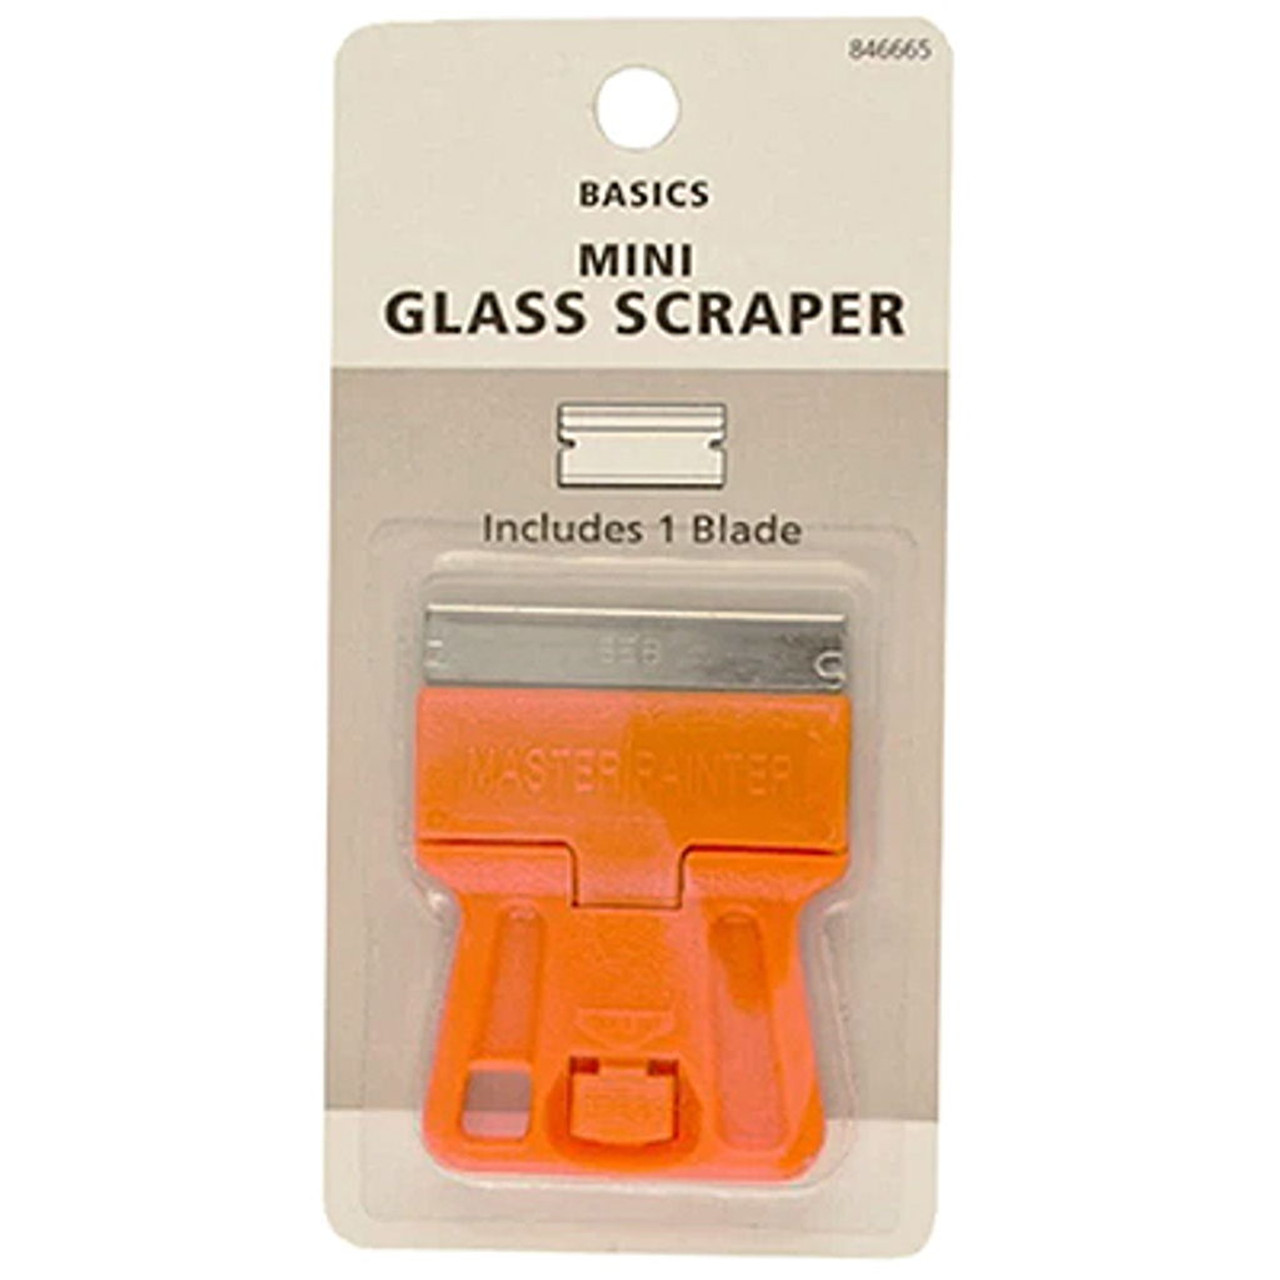 FI- Plastic Scraper with Knife for Film Peeling, Paint, Glass